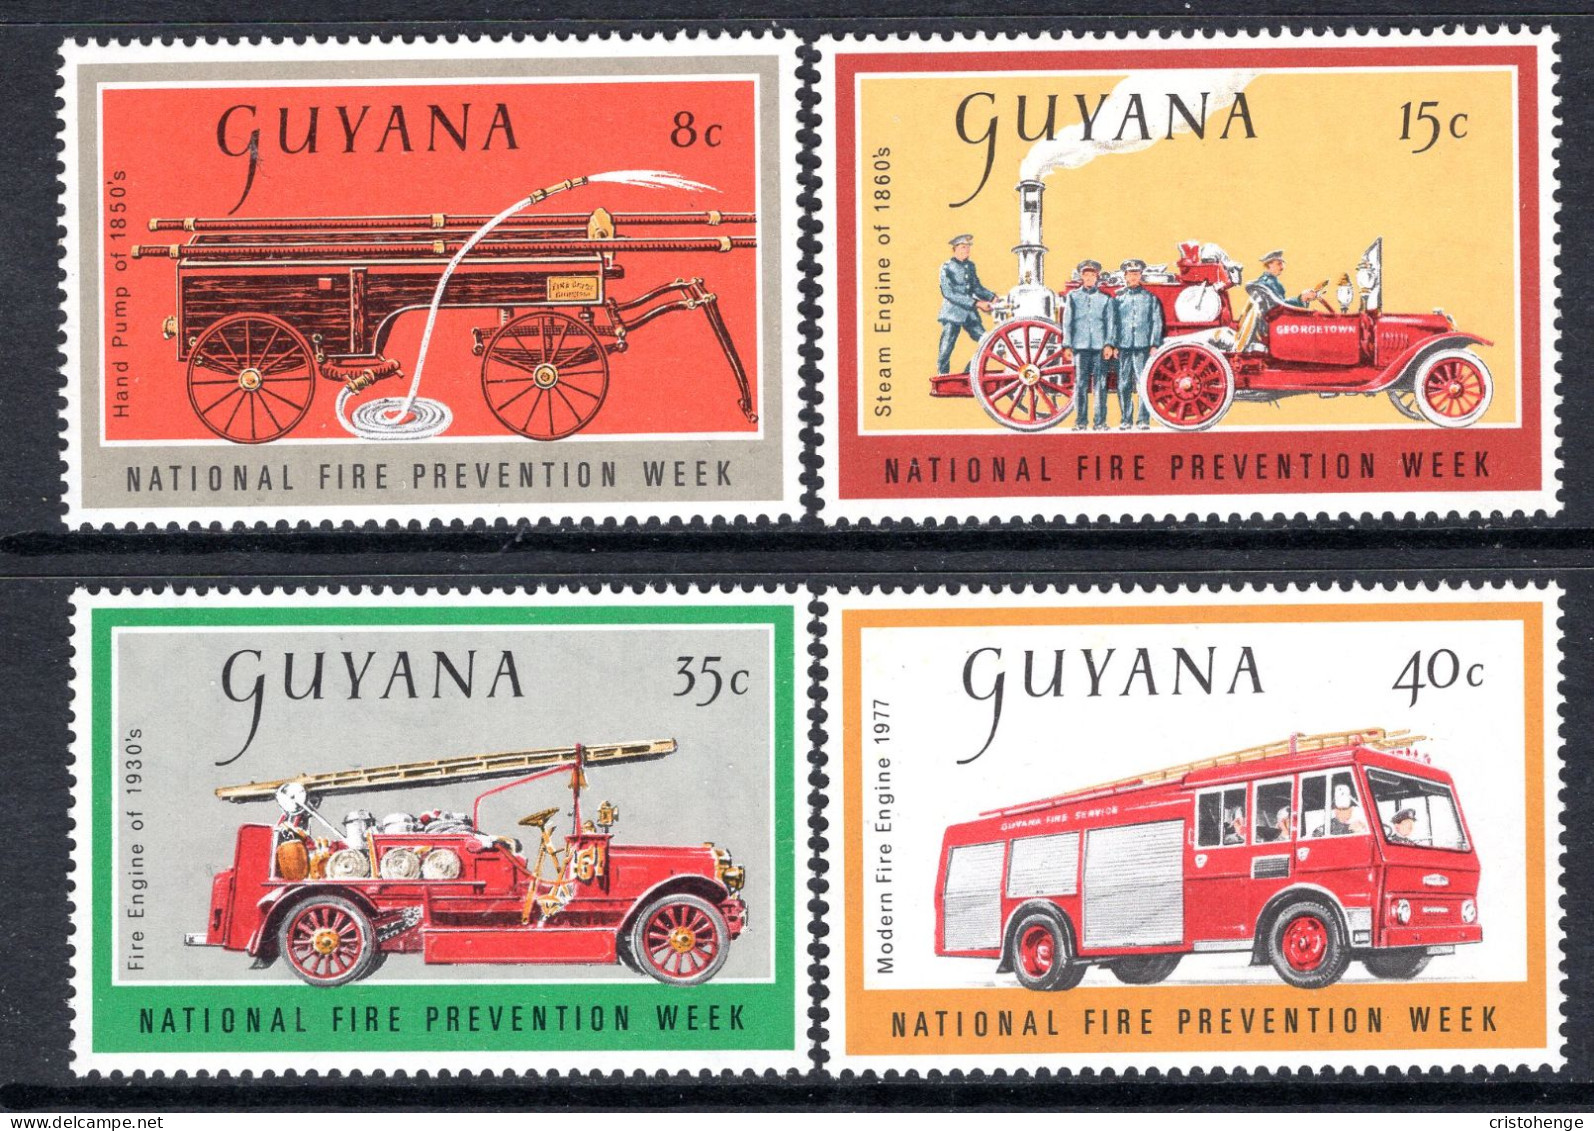 Guyana 1977 National Fire Prevention Week Set MNH (SG 677-680) - Guyana (1966-...)